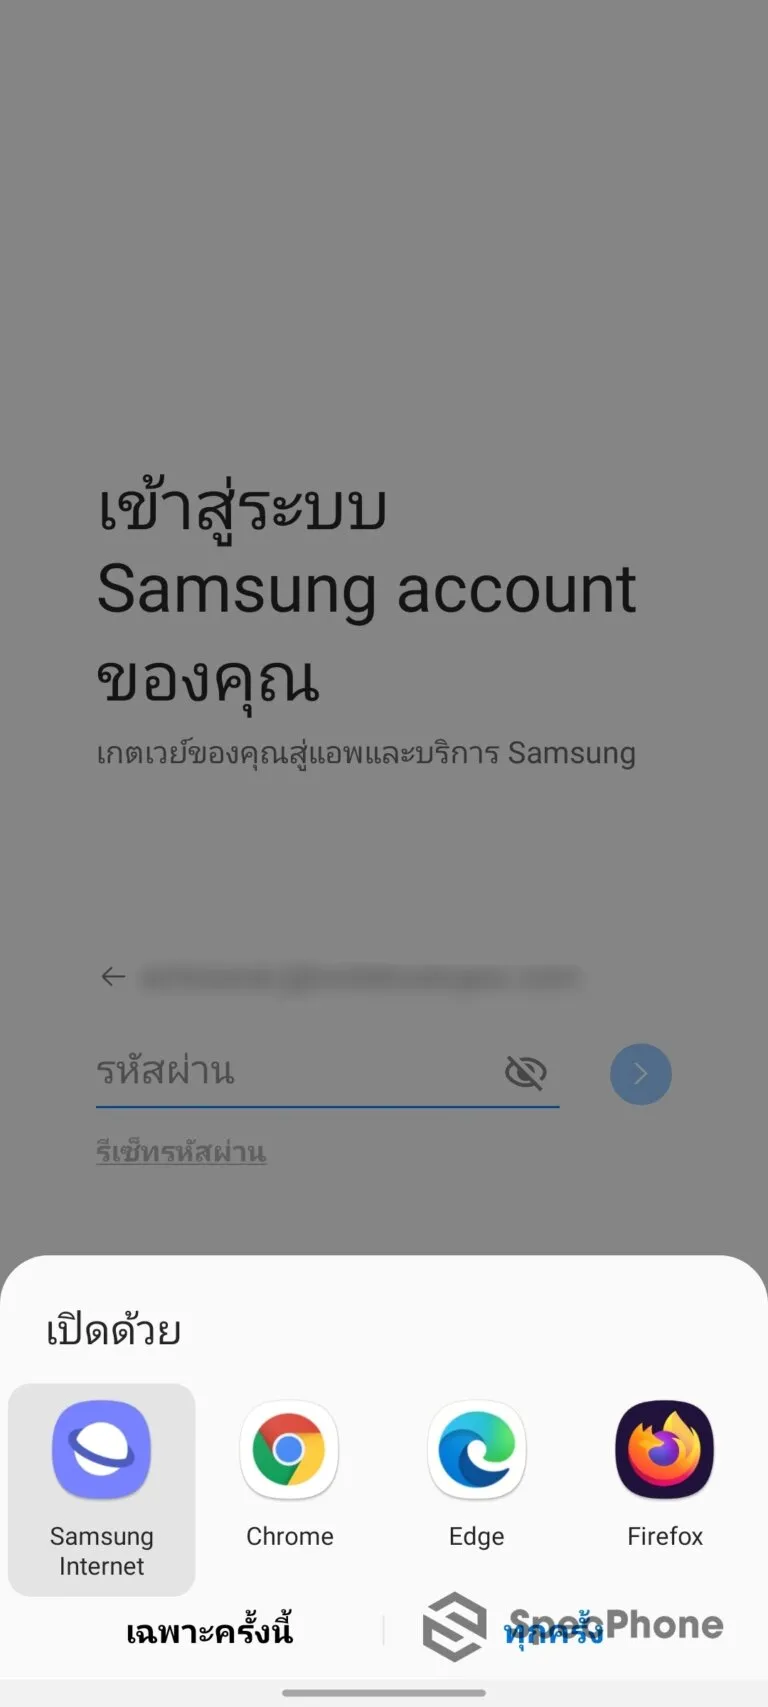 Samsung Account 08 1